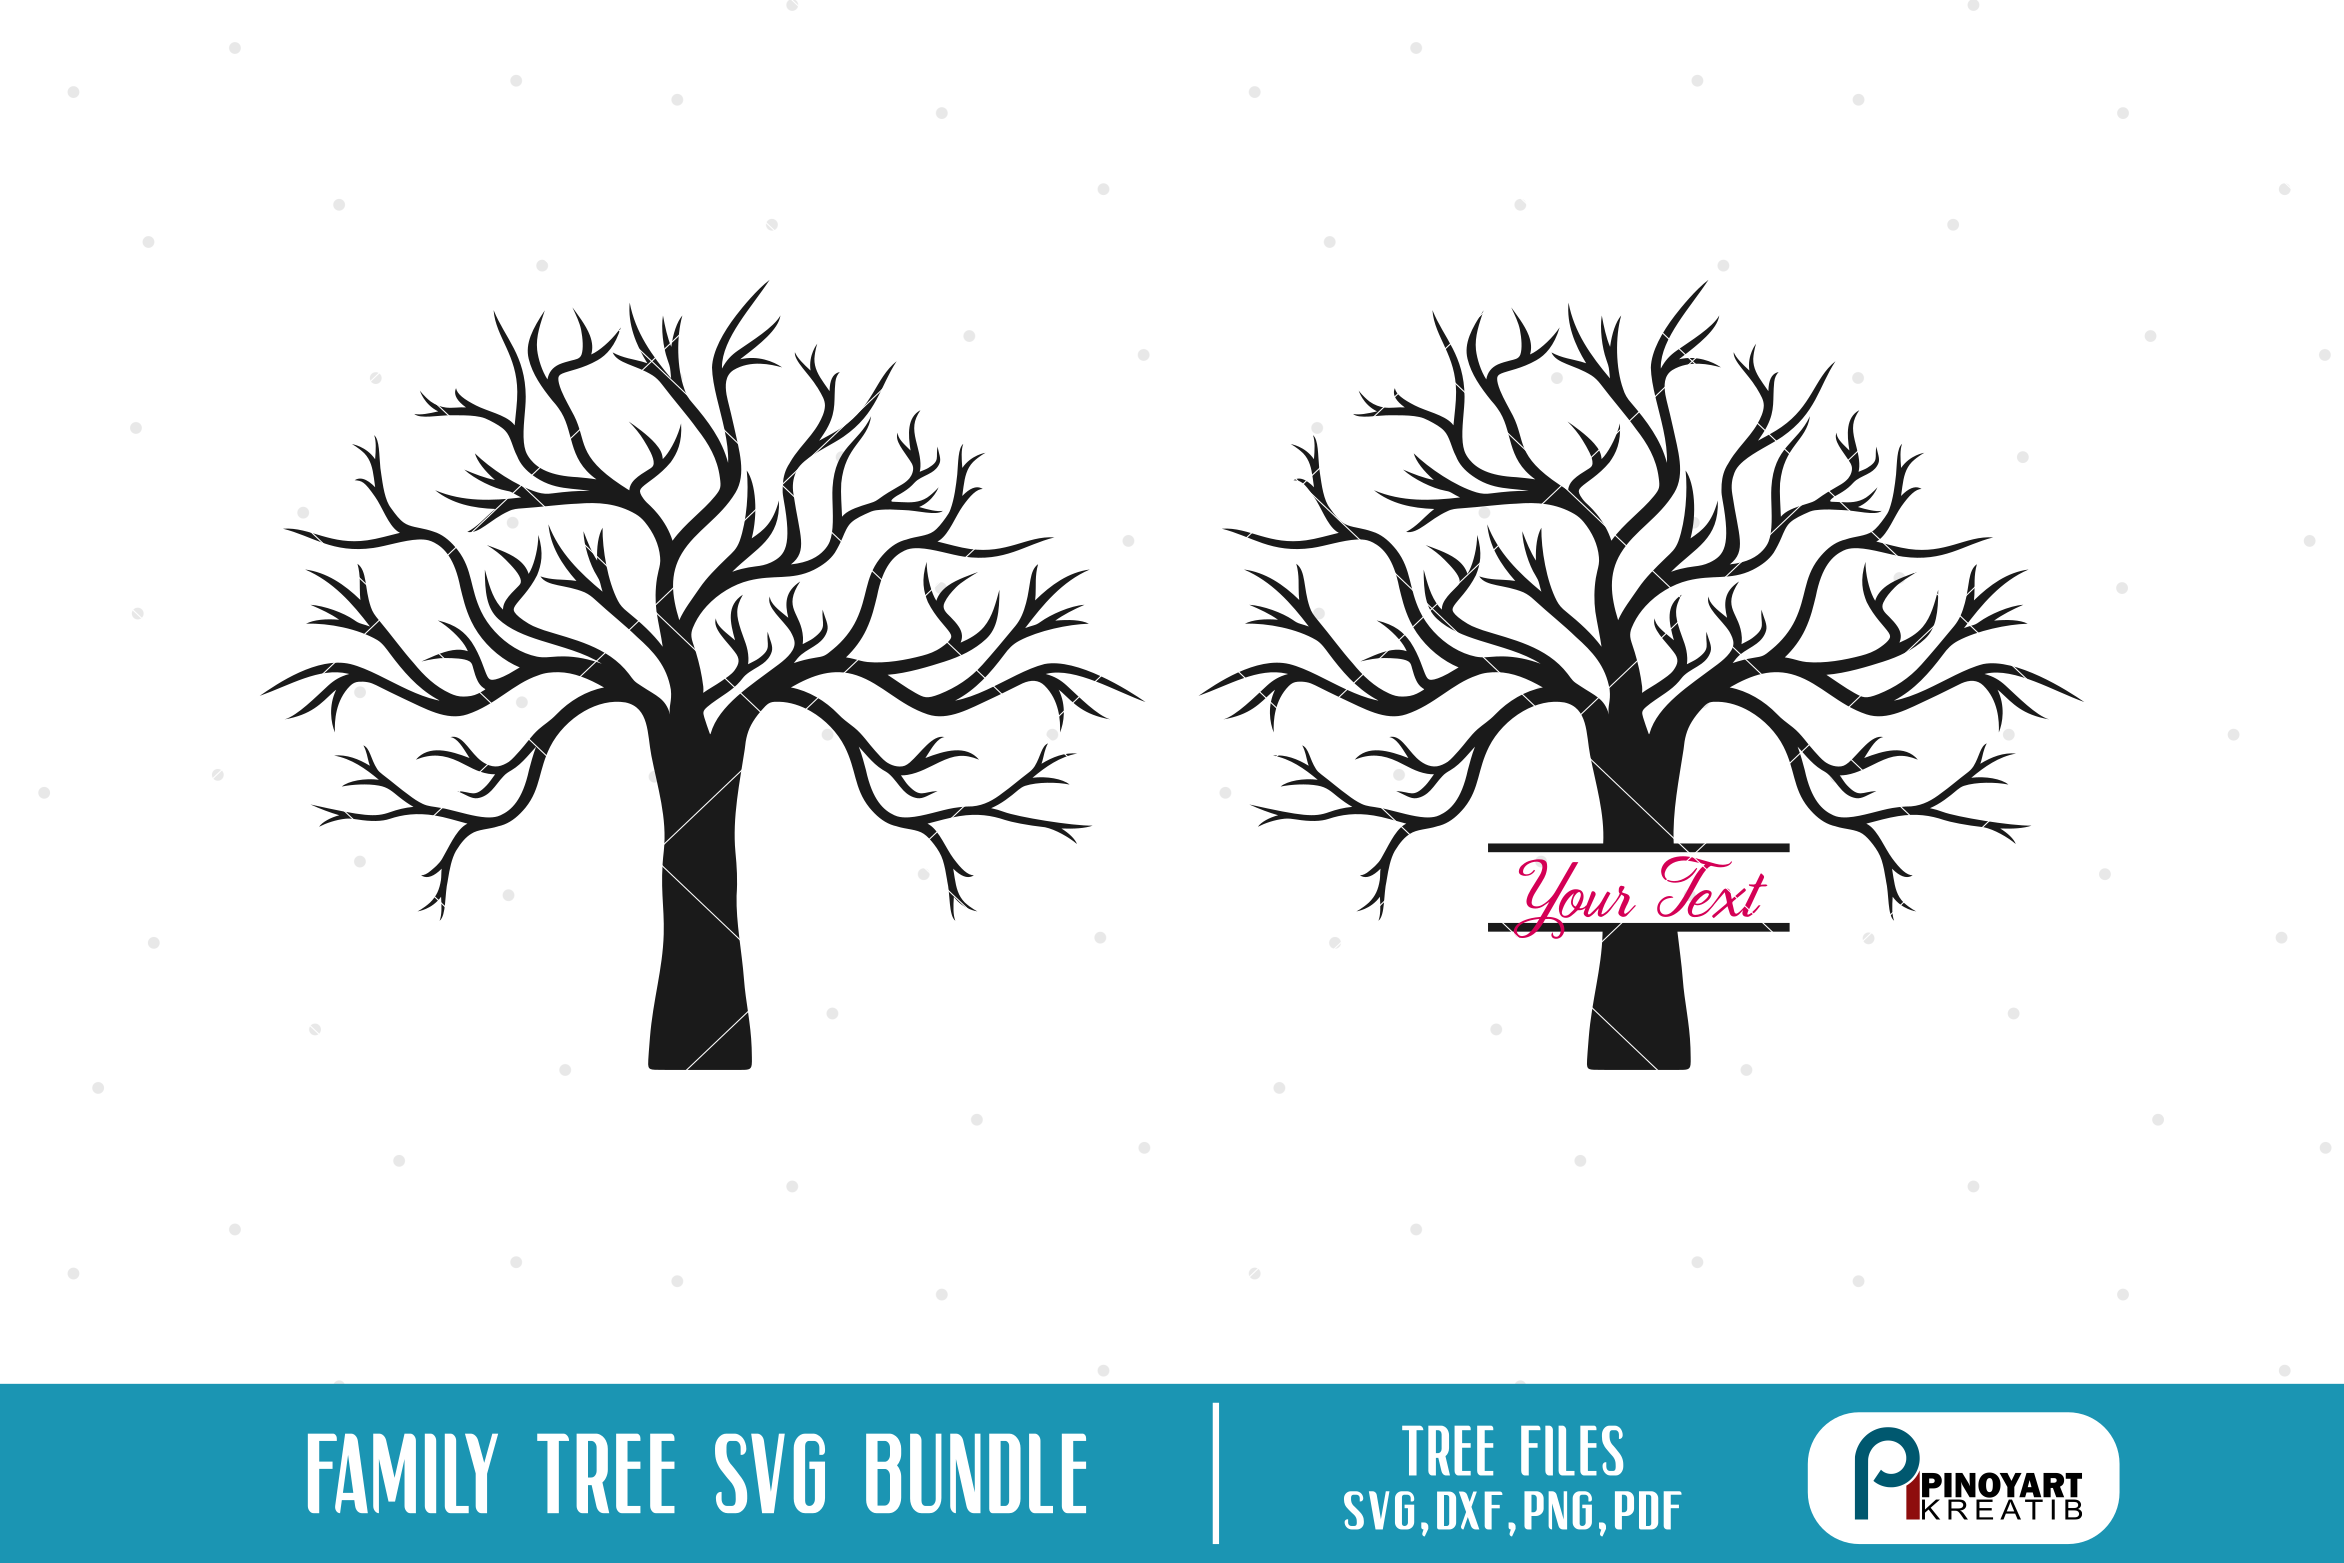 Family Tree SVG Bundle - 2 tree silhouette vectors